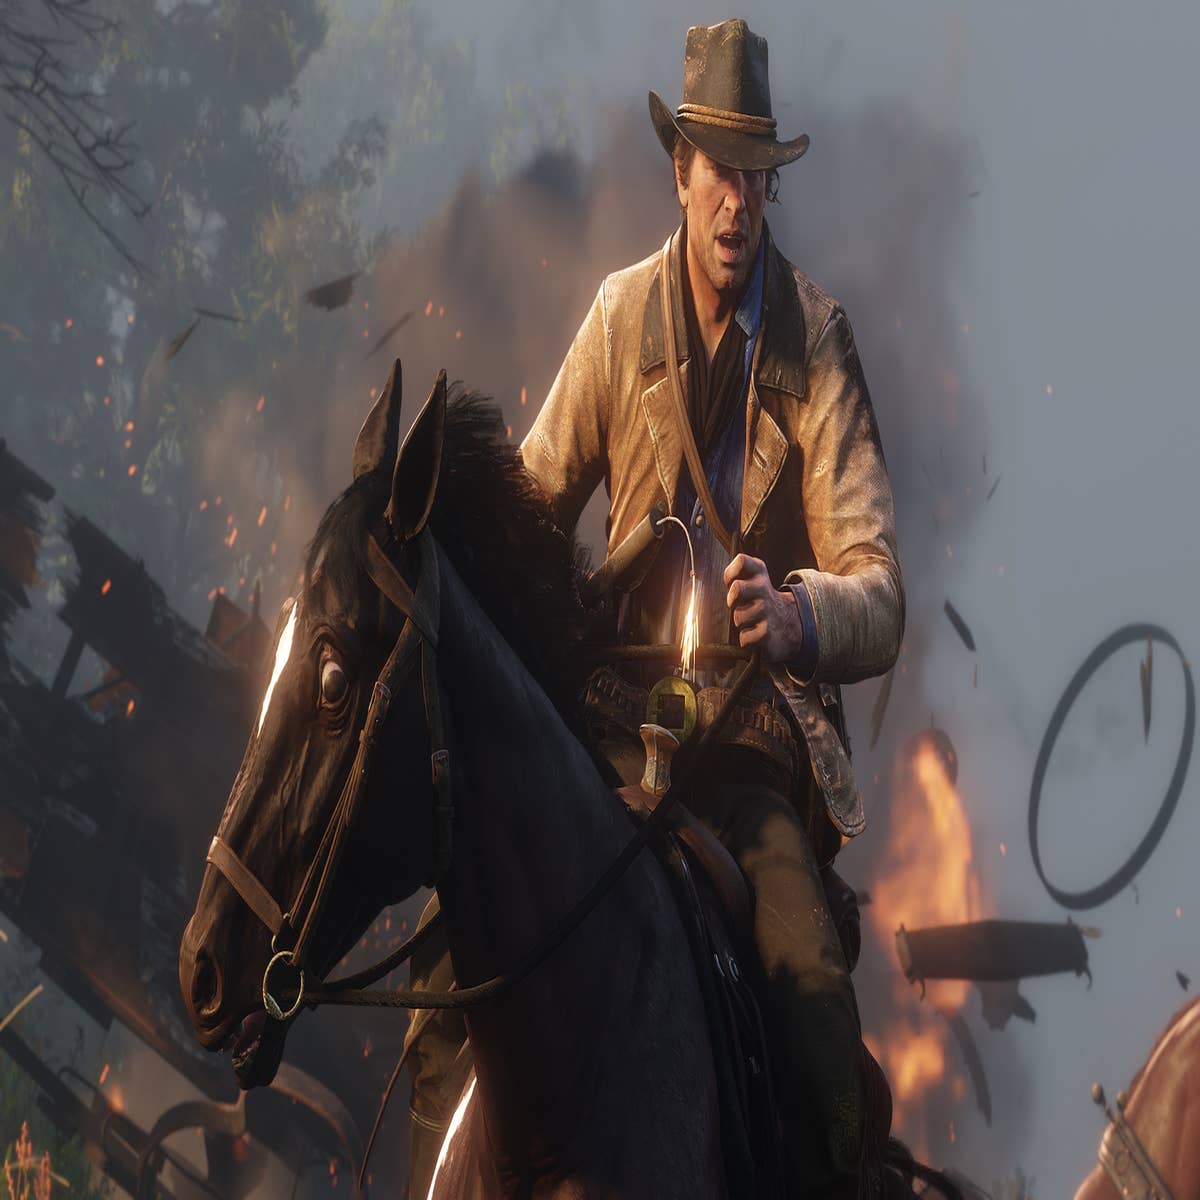 Red Dead Redemption 2, native 4K or resolution scaling? - Gamersyde